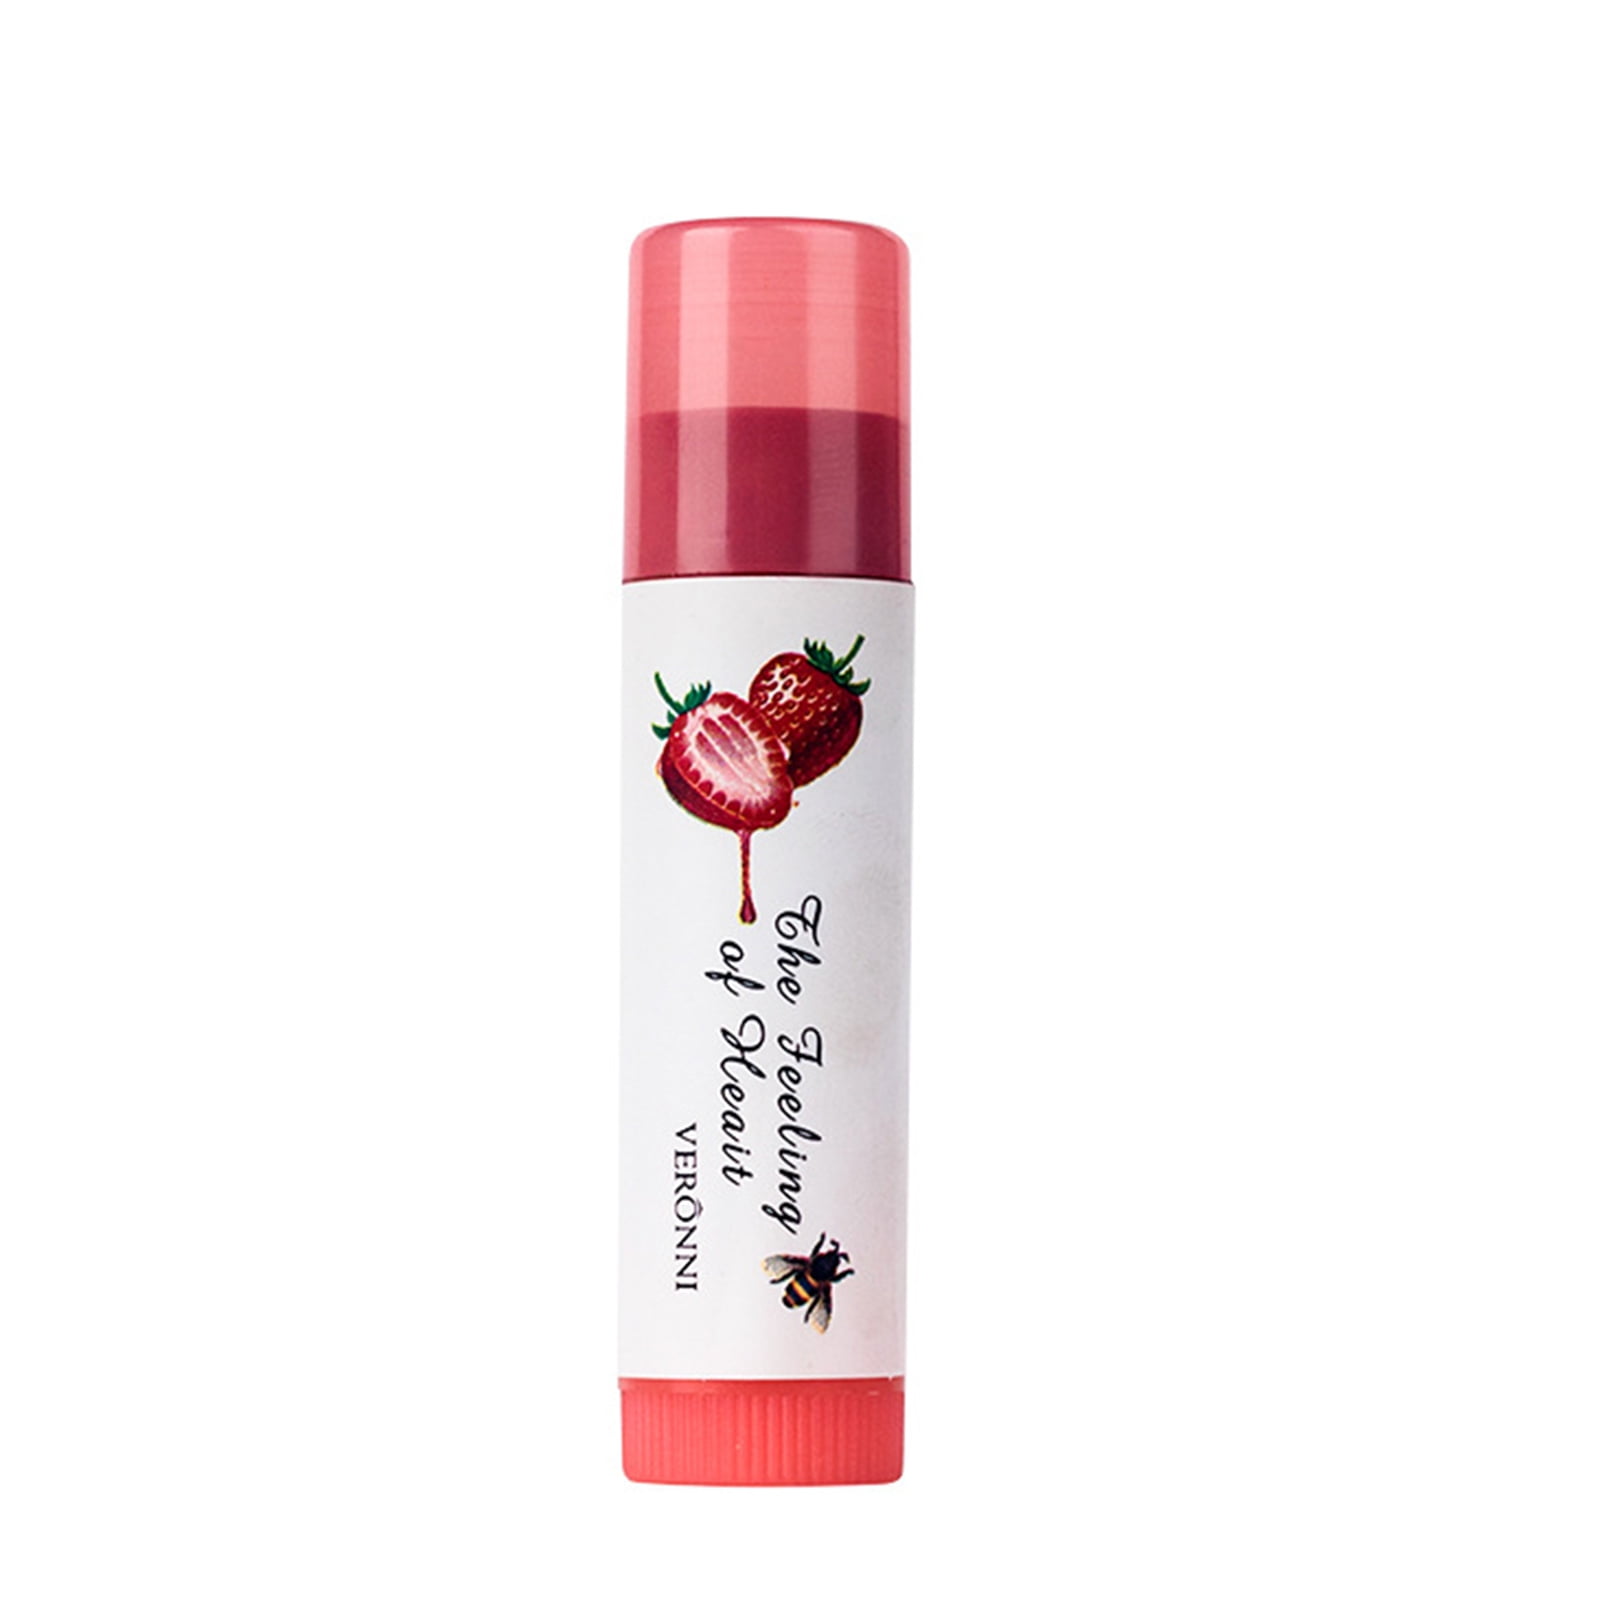 SSBSM 3.5g Lip Stick Hydrating Moisturizing Temperature Change Fruit Flavor  Lip Care Makeup Non-irritating Watery Lip Gloss Balm Lady Women Fashion